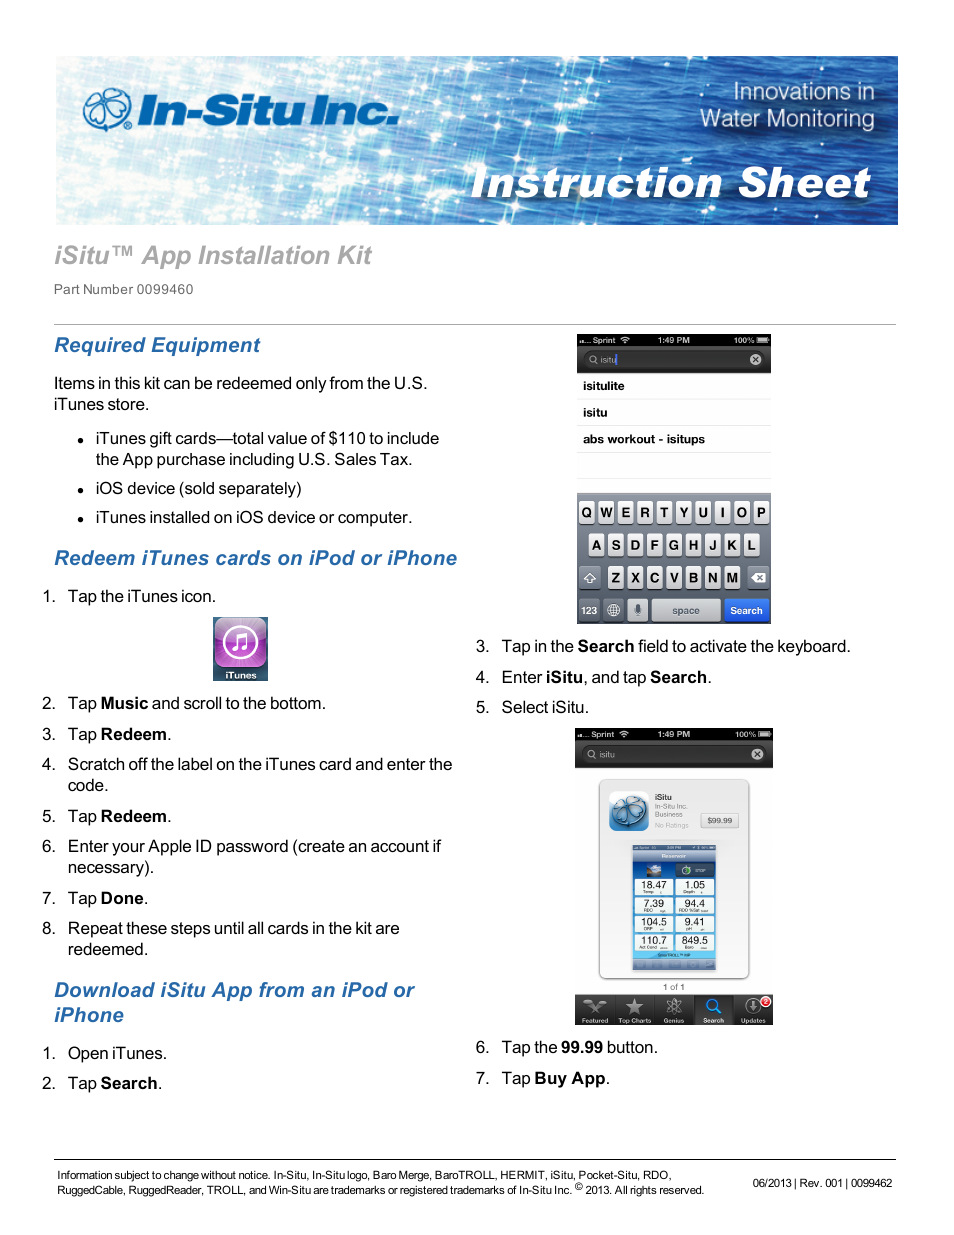 iSitu App Installation Kit